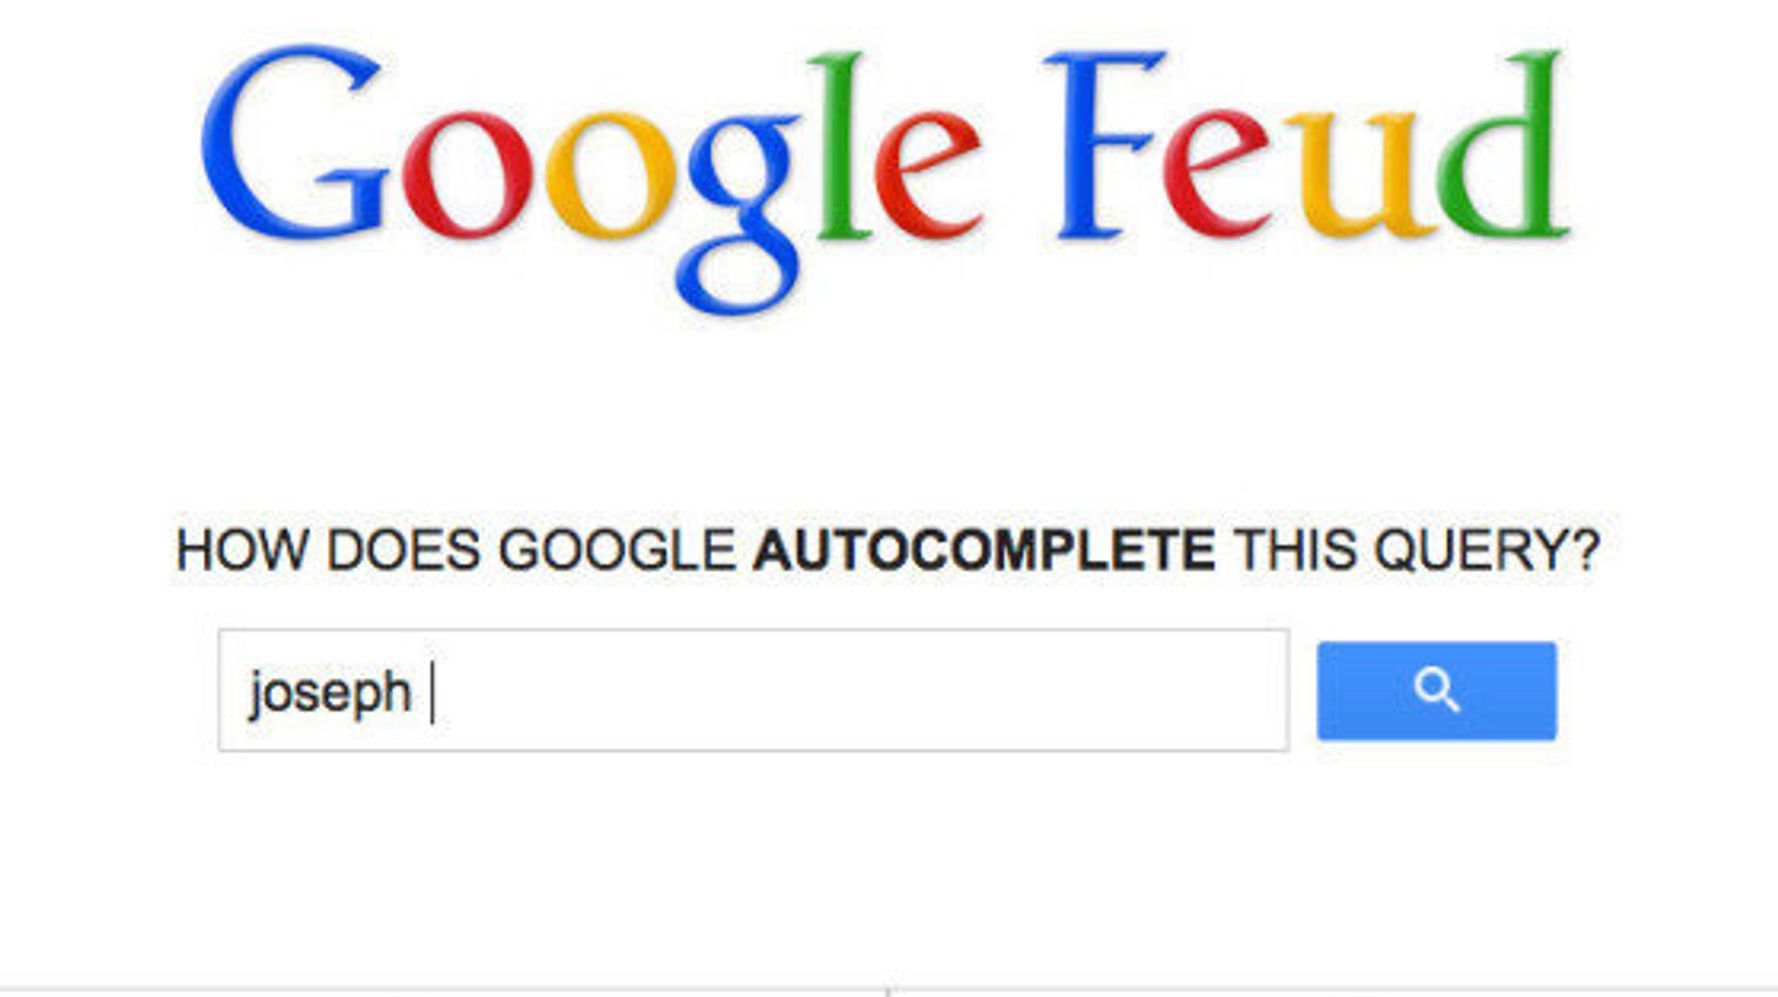 Google Feud / AutoCompete